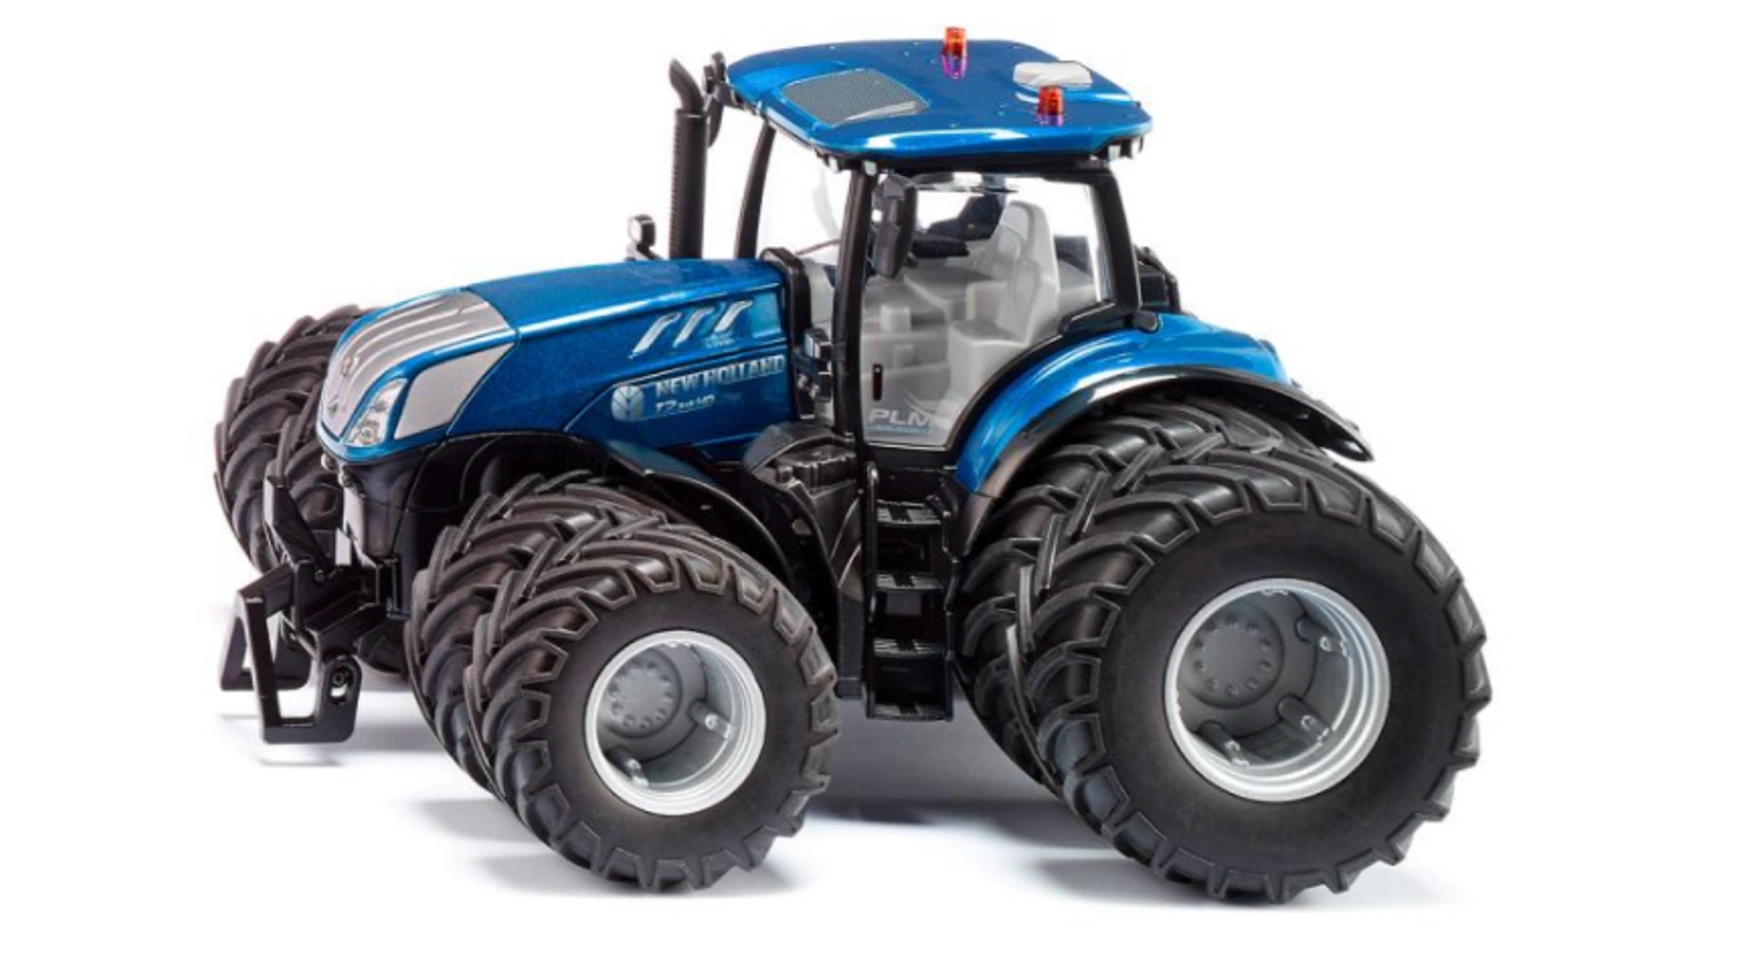 Control new holland t7315 с двойными шинами и bluetooth Siku babycare new holland tractor розовый